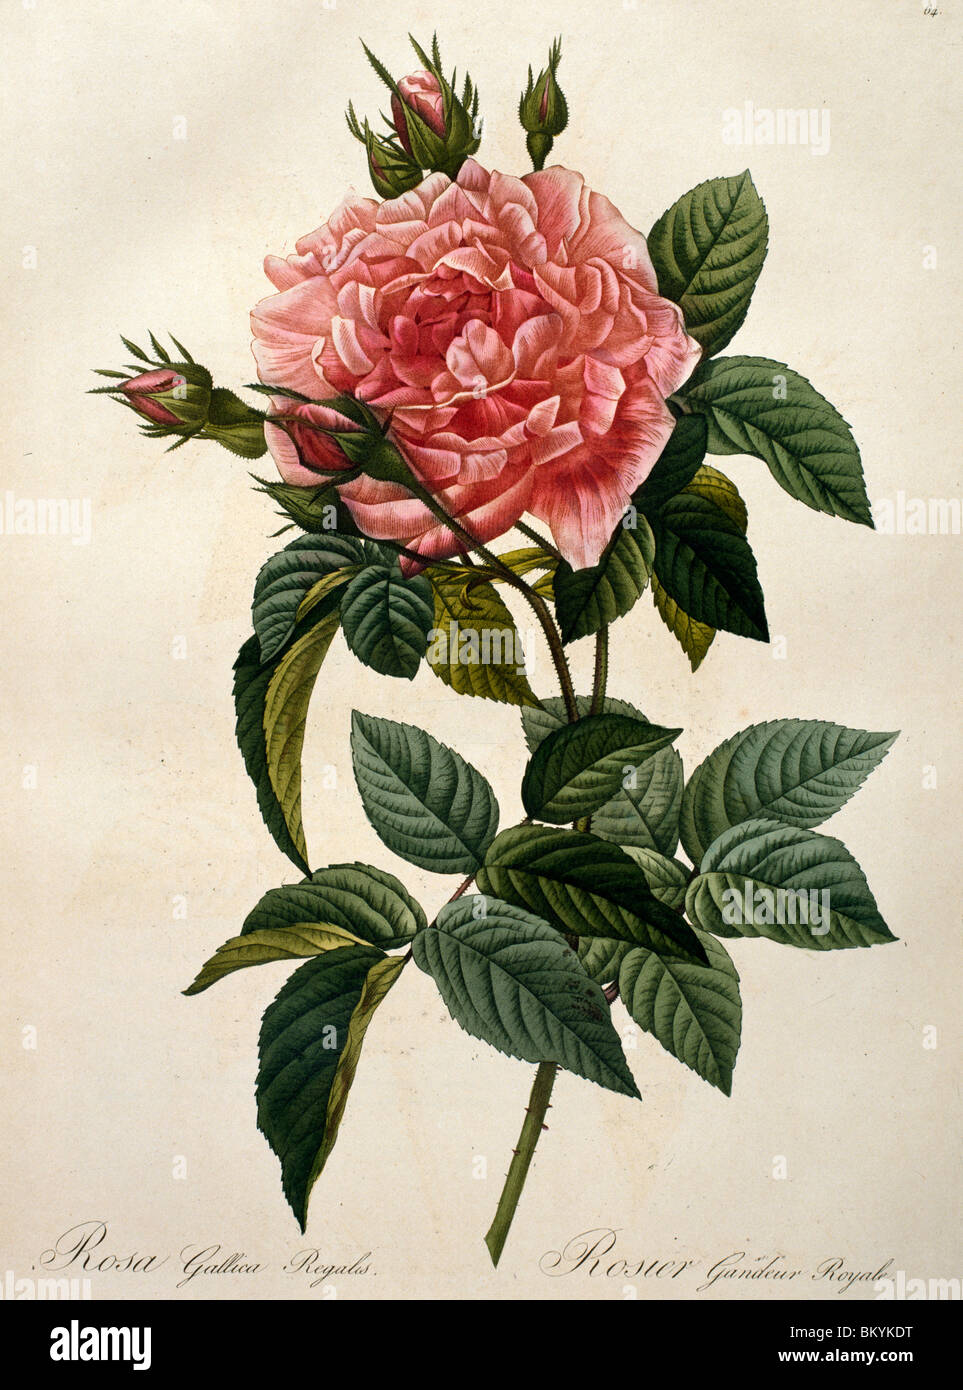 Pierre-Joseph Redouté Les Roses French Rose Rosa Galluca Offuenalis Print 24 394 